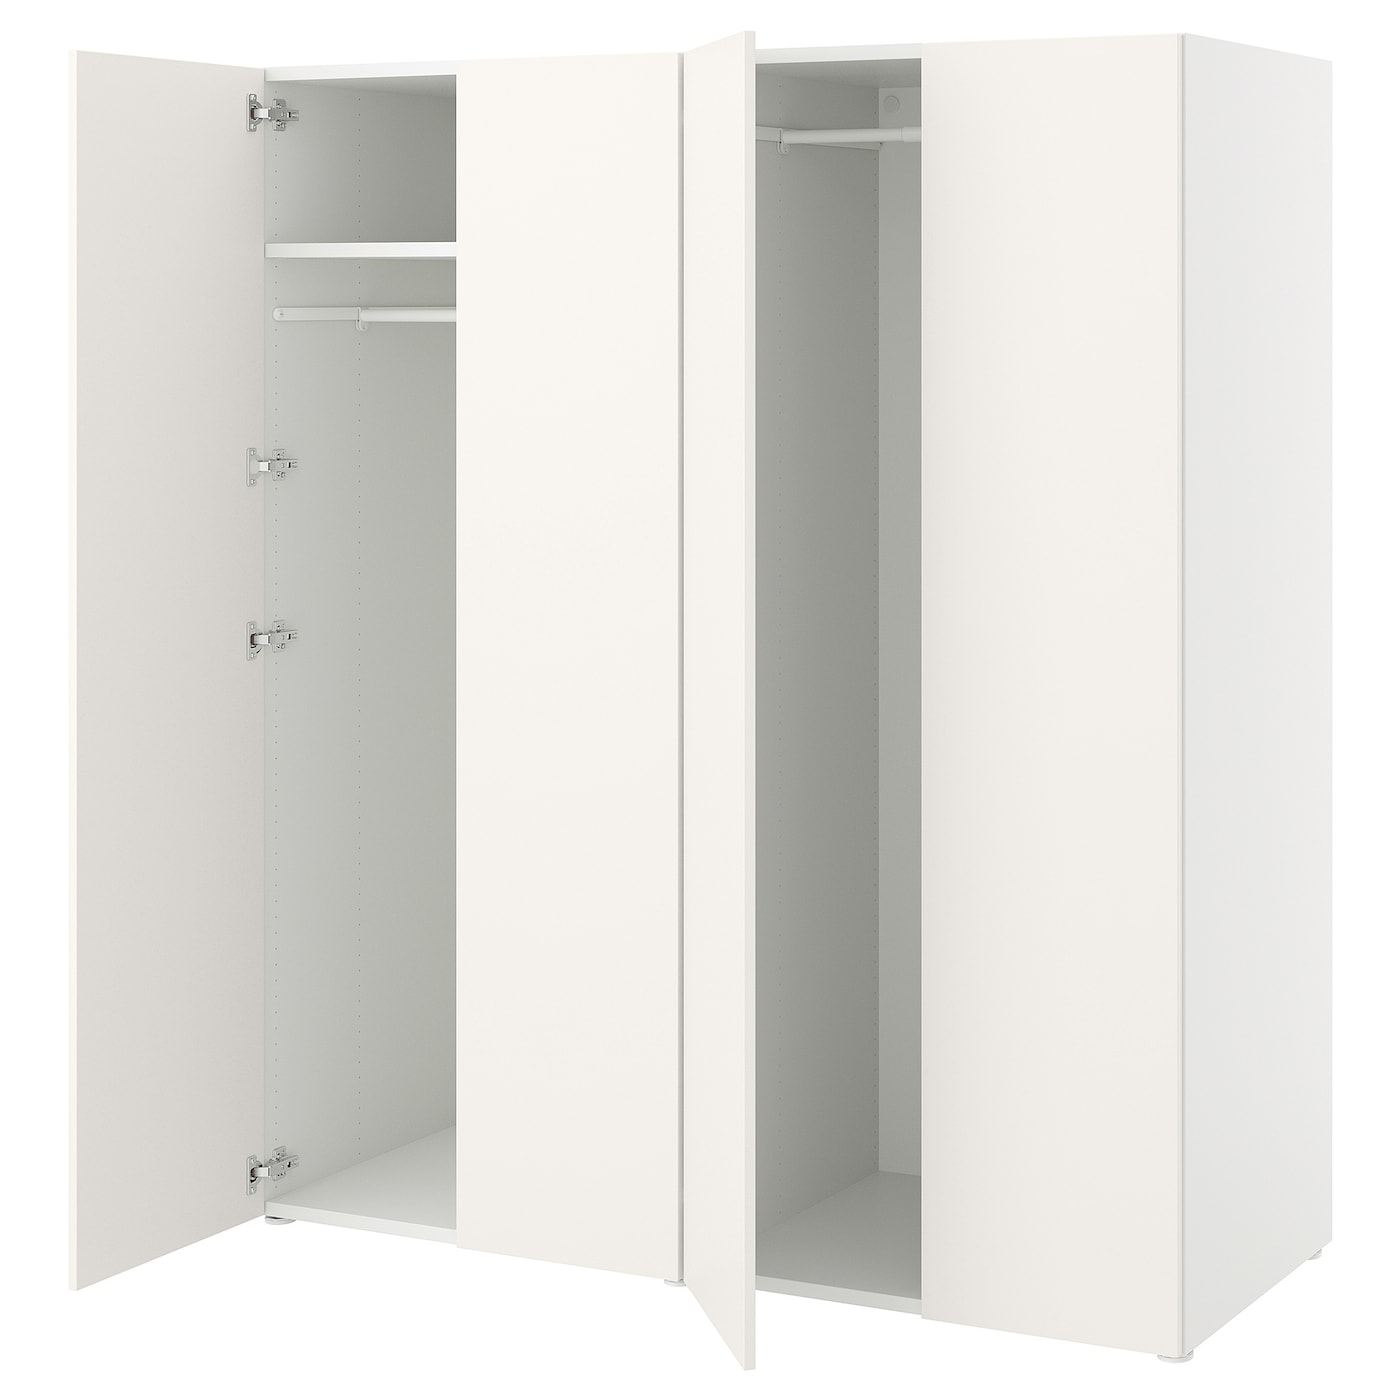 Платяной шкаф - IKEA PLATSA/FONNES  / ПЛАТСА/ФОННЕС ИКЕА, 160x57x181 см, белый